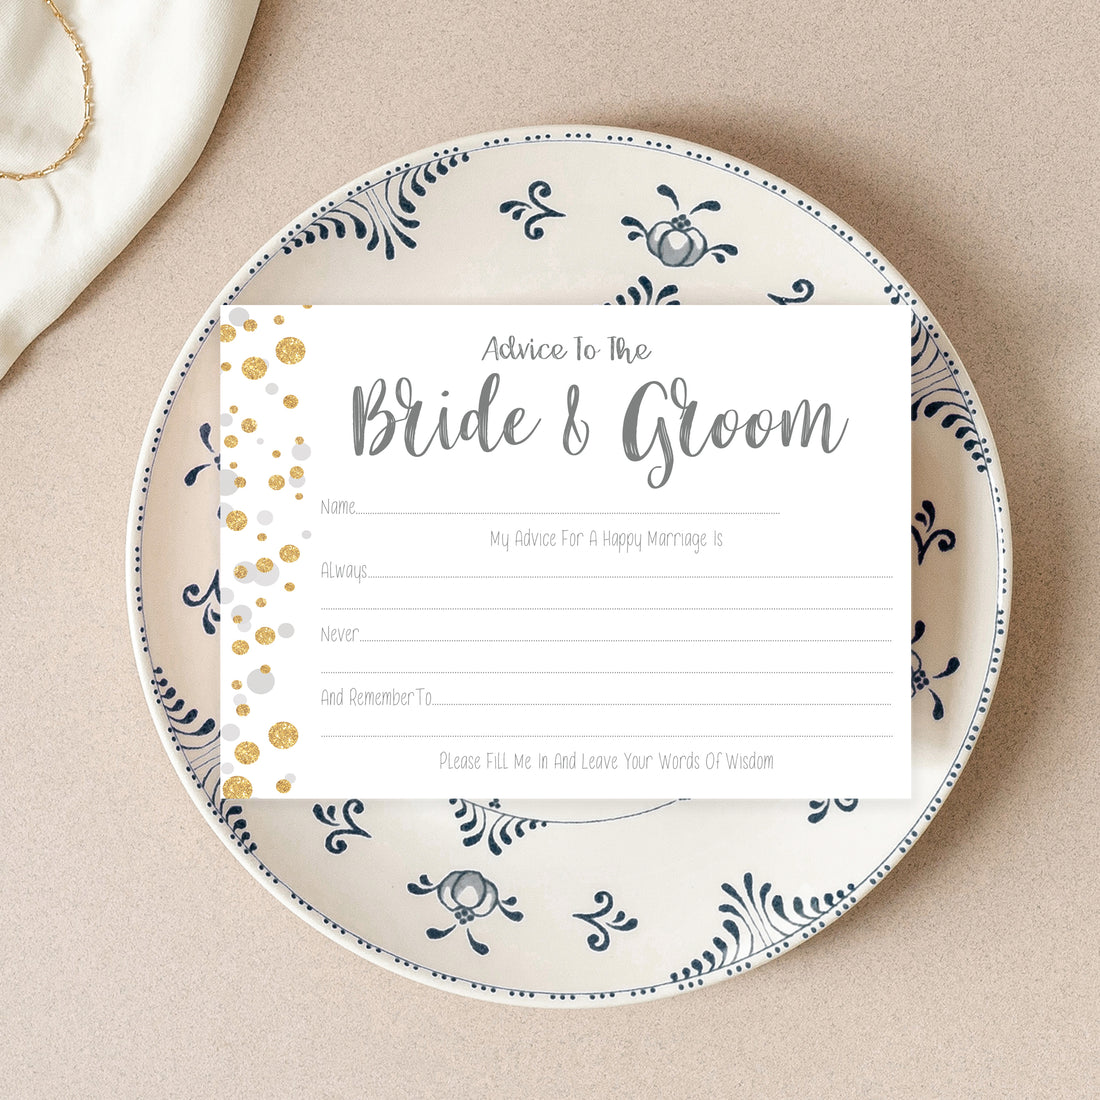 Polka Dot Wedding Advice To The Bride and Groom Cards